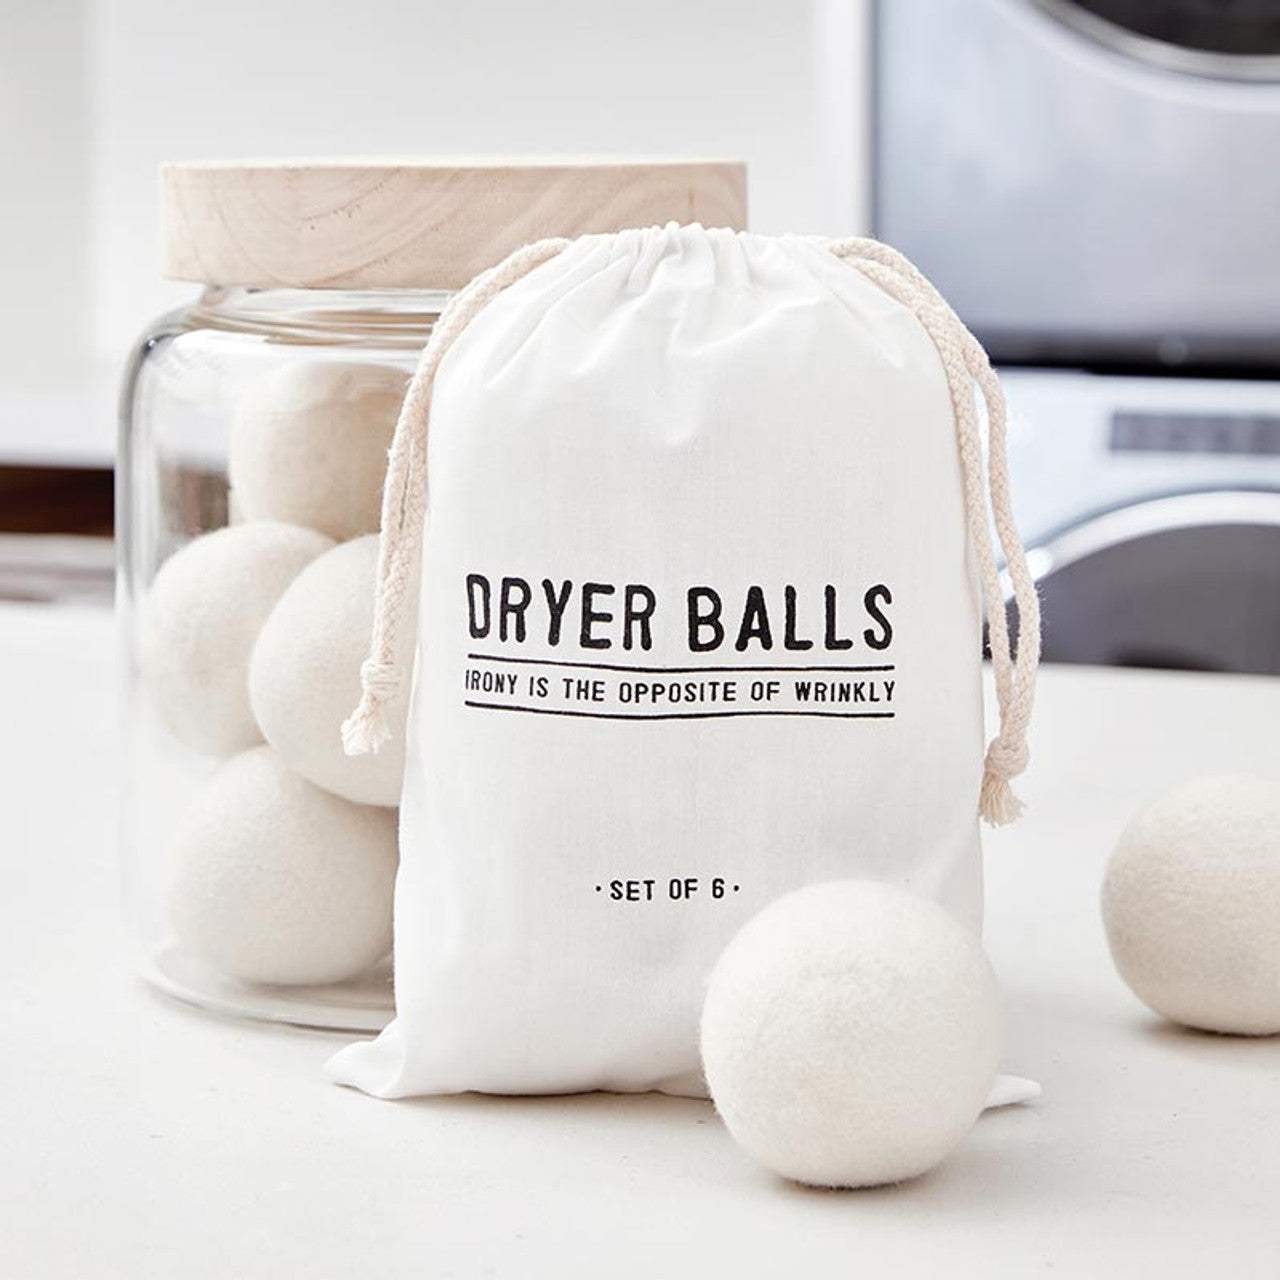 Wool Dryer Balls (6 pack)